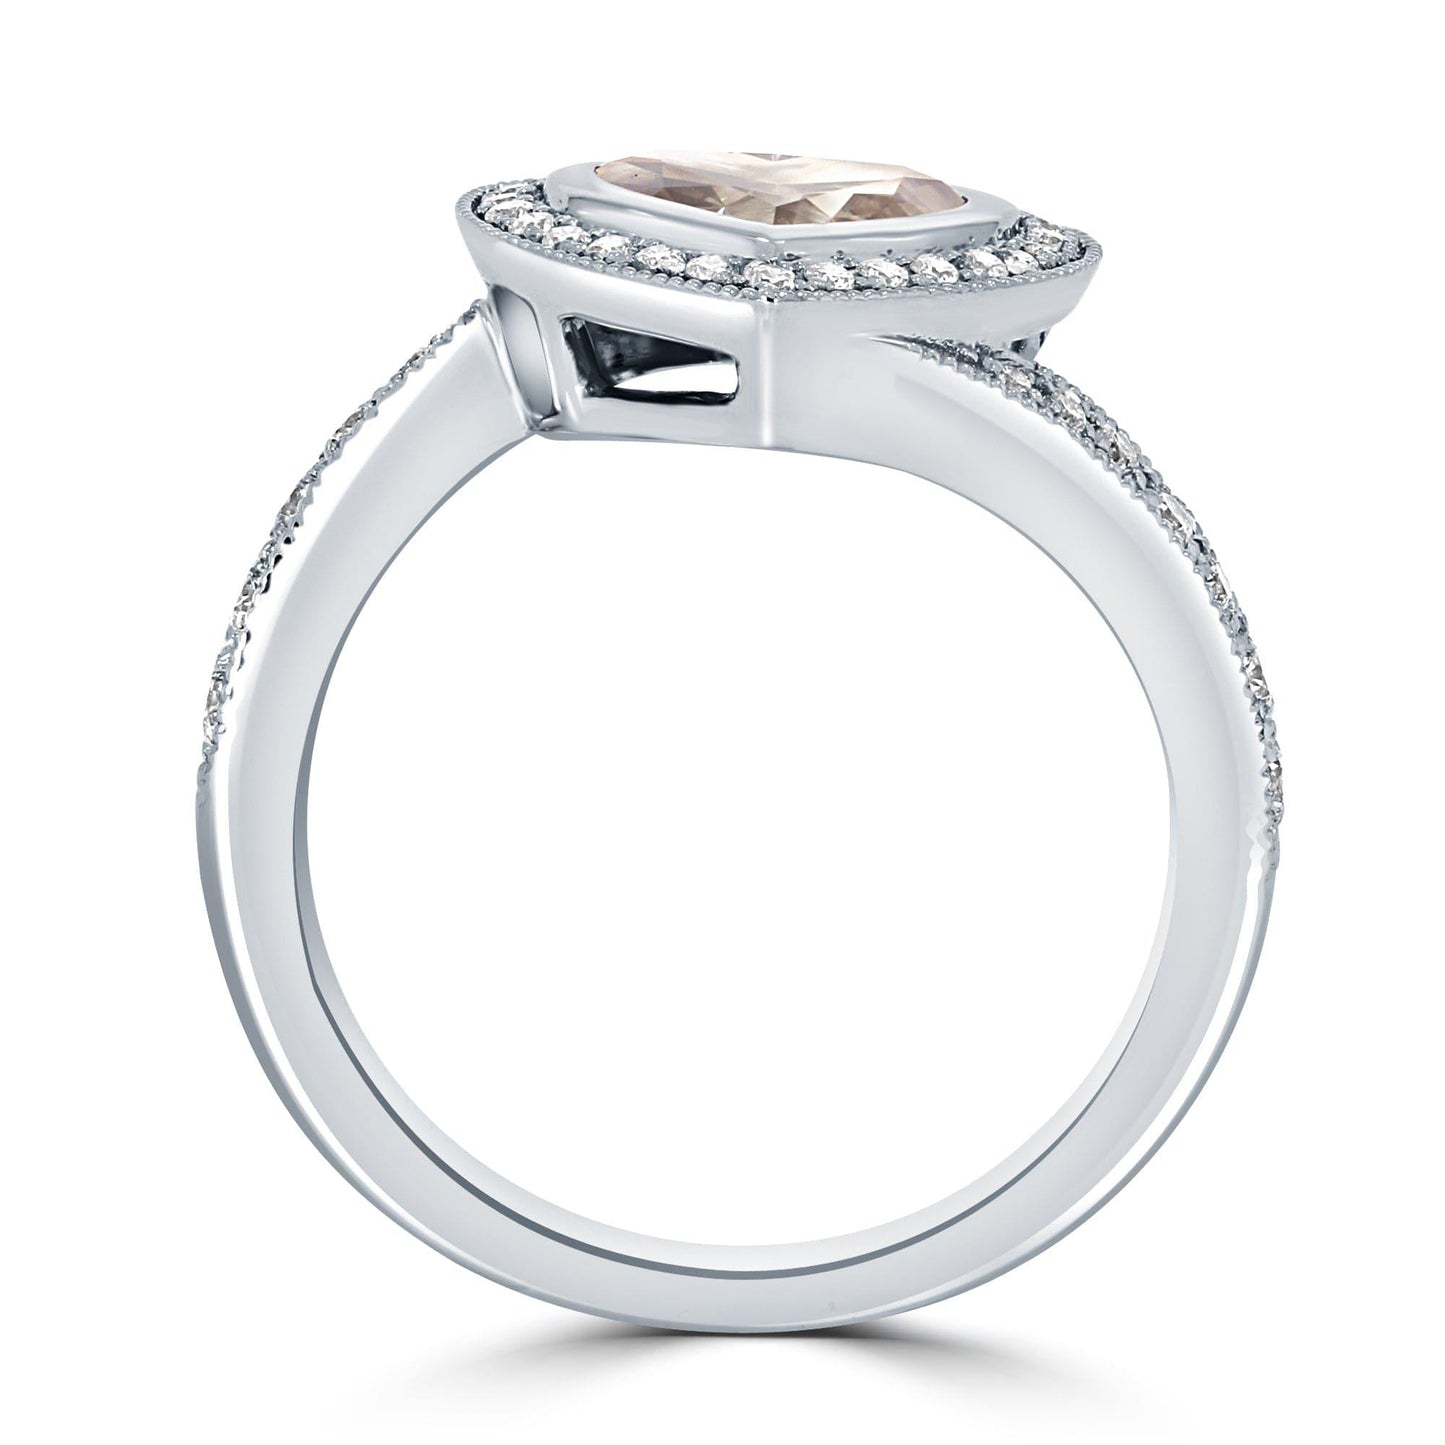 Fancy Dark Greenish Gray Heart Shaped Diamond Ring - Rosendorff Diamond Jewellers